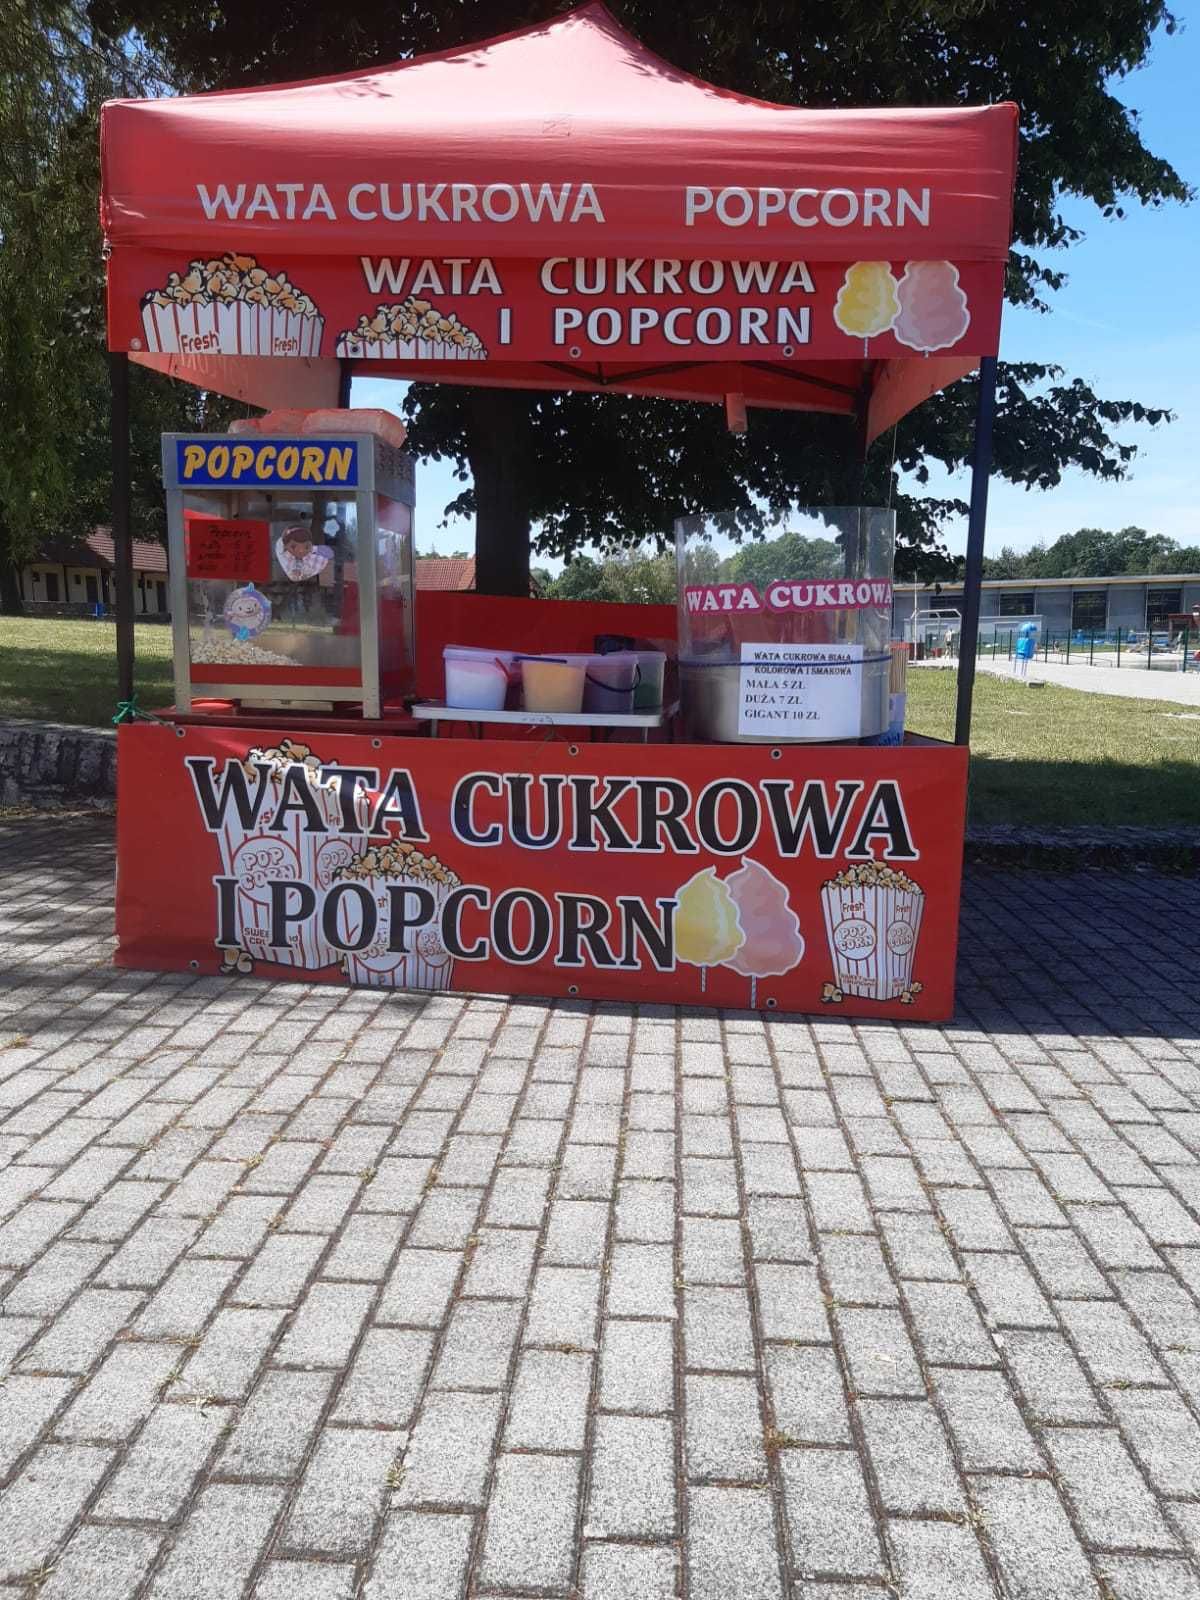 Wata cukrowa i popcorn